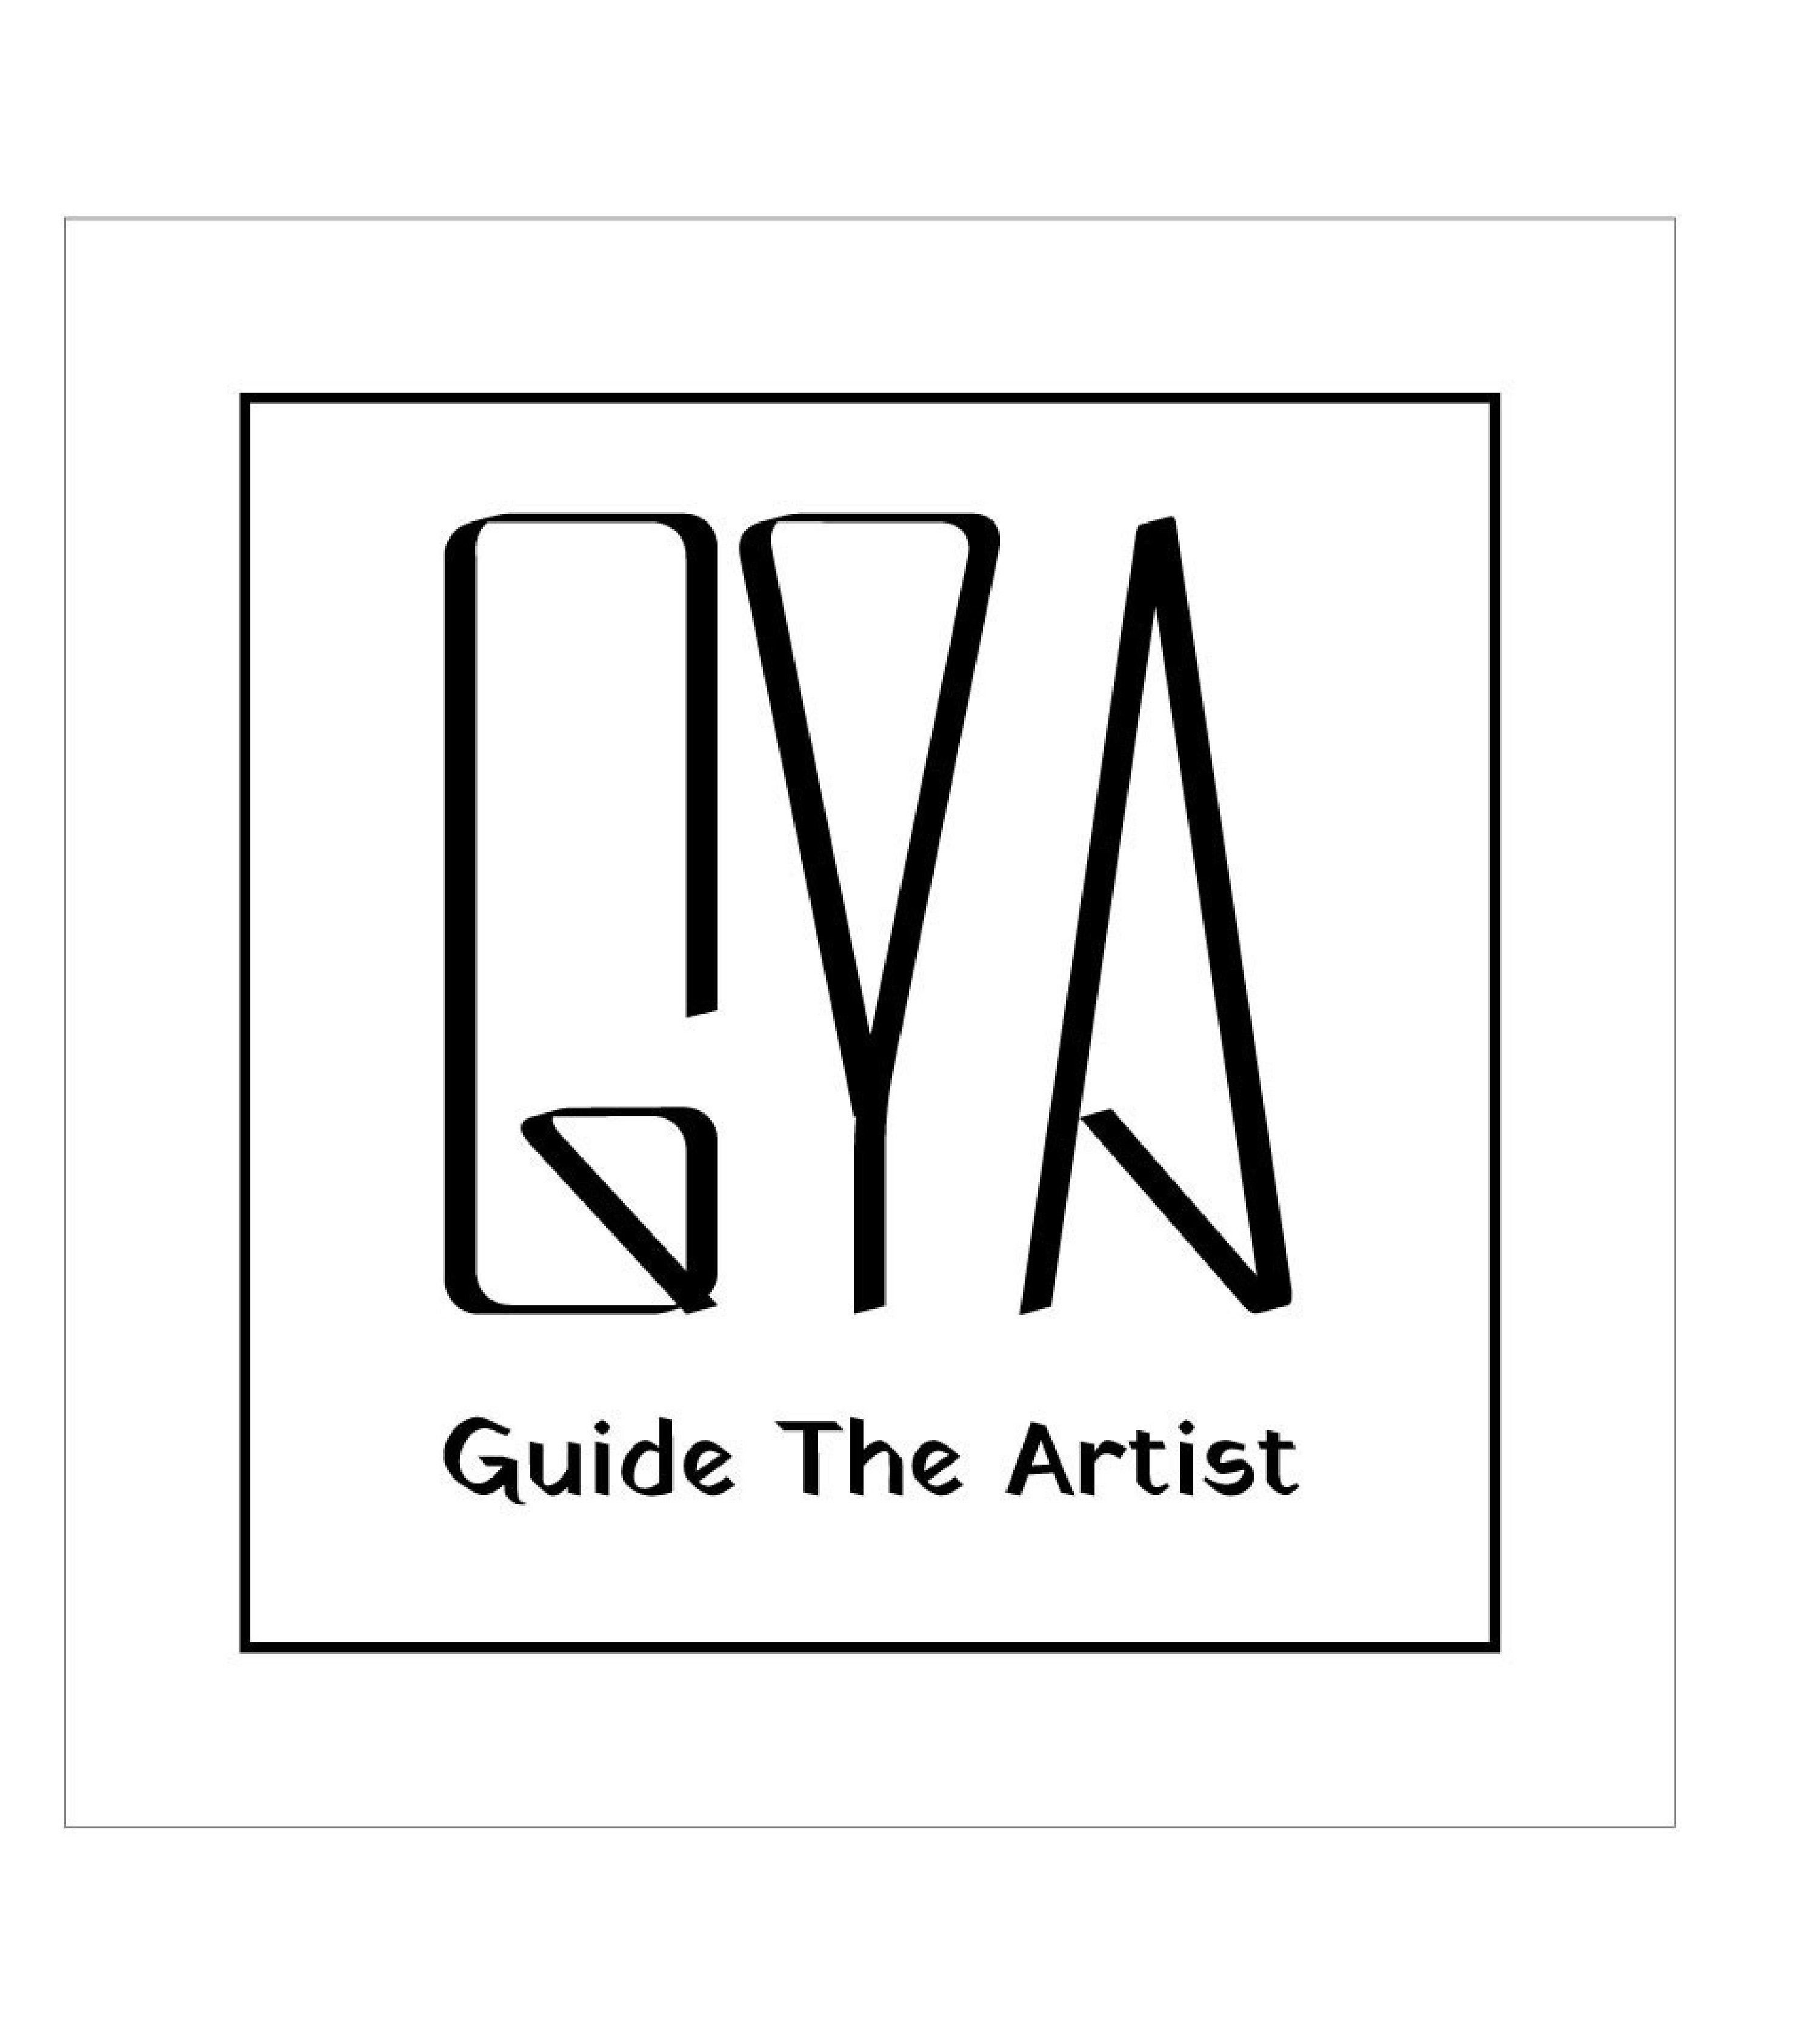  GTA GUIDE THE ARTIST